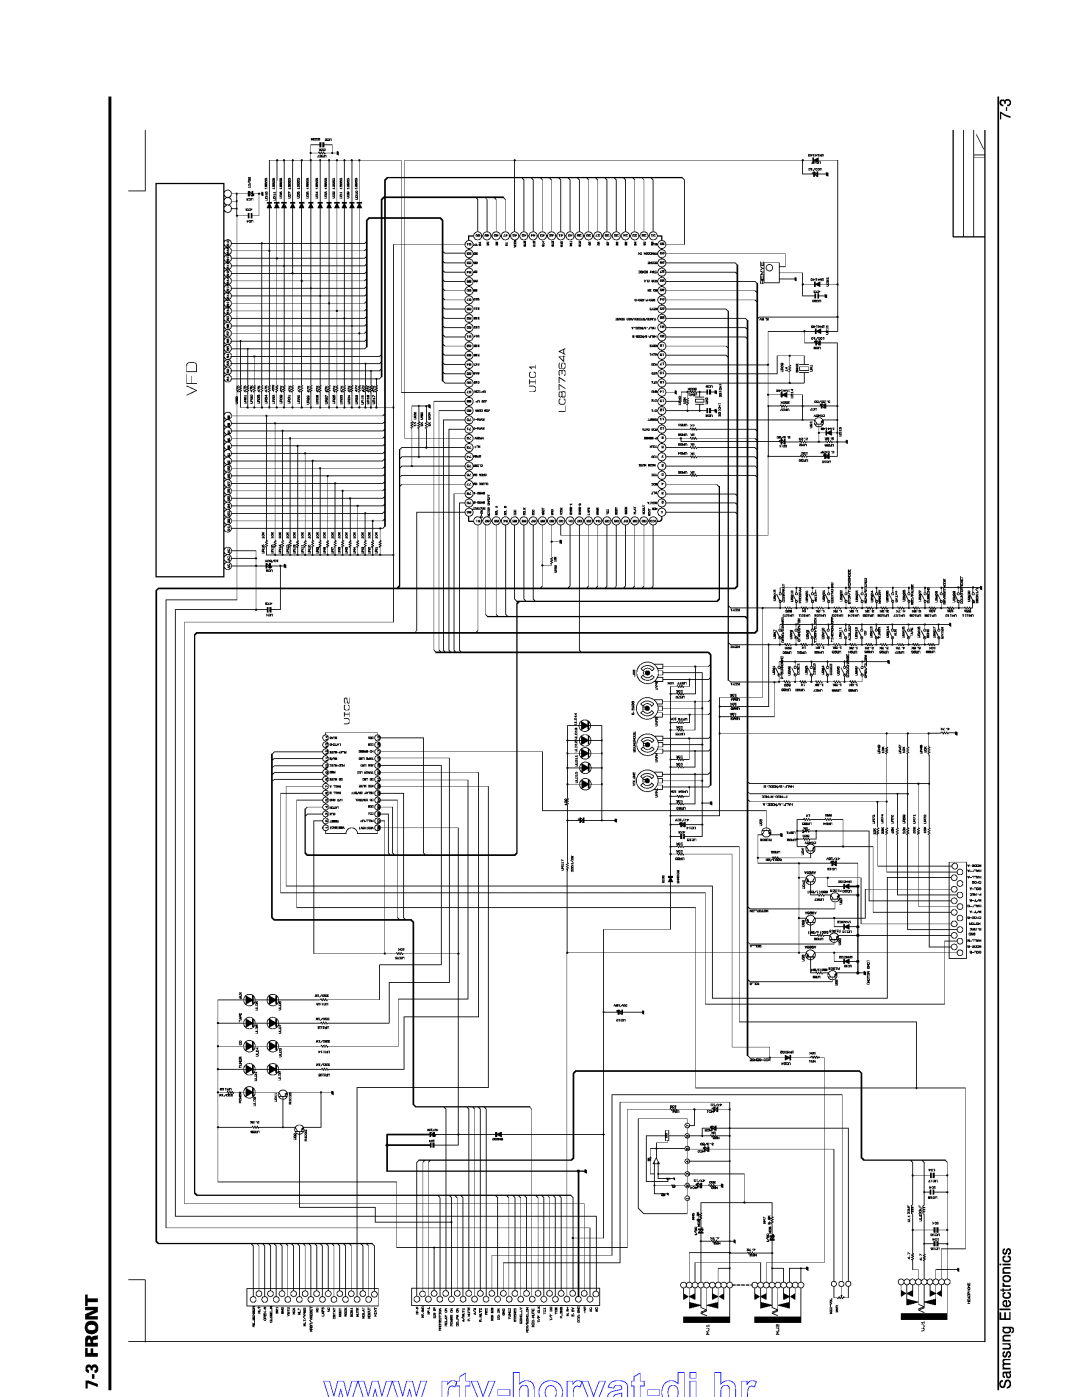 Samsung MAX-B550 service manual 7-3FRONT, Samsung Electronics 